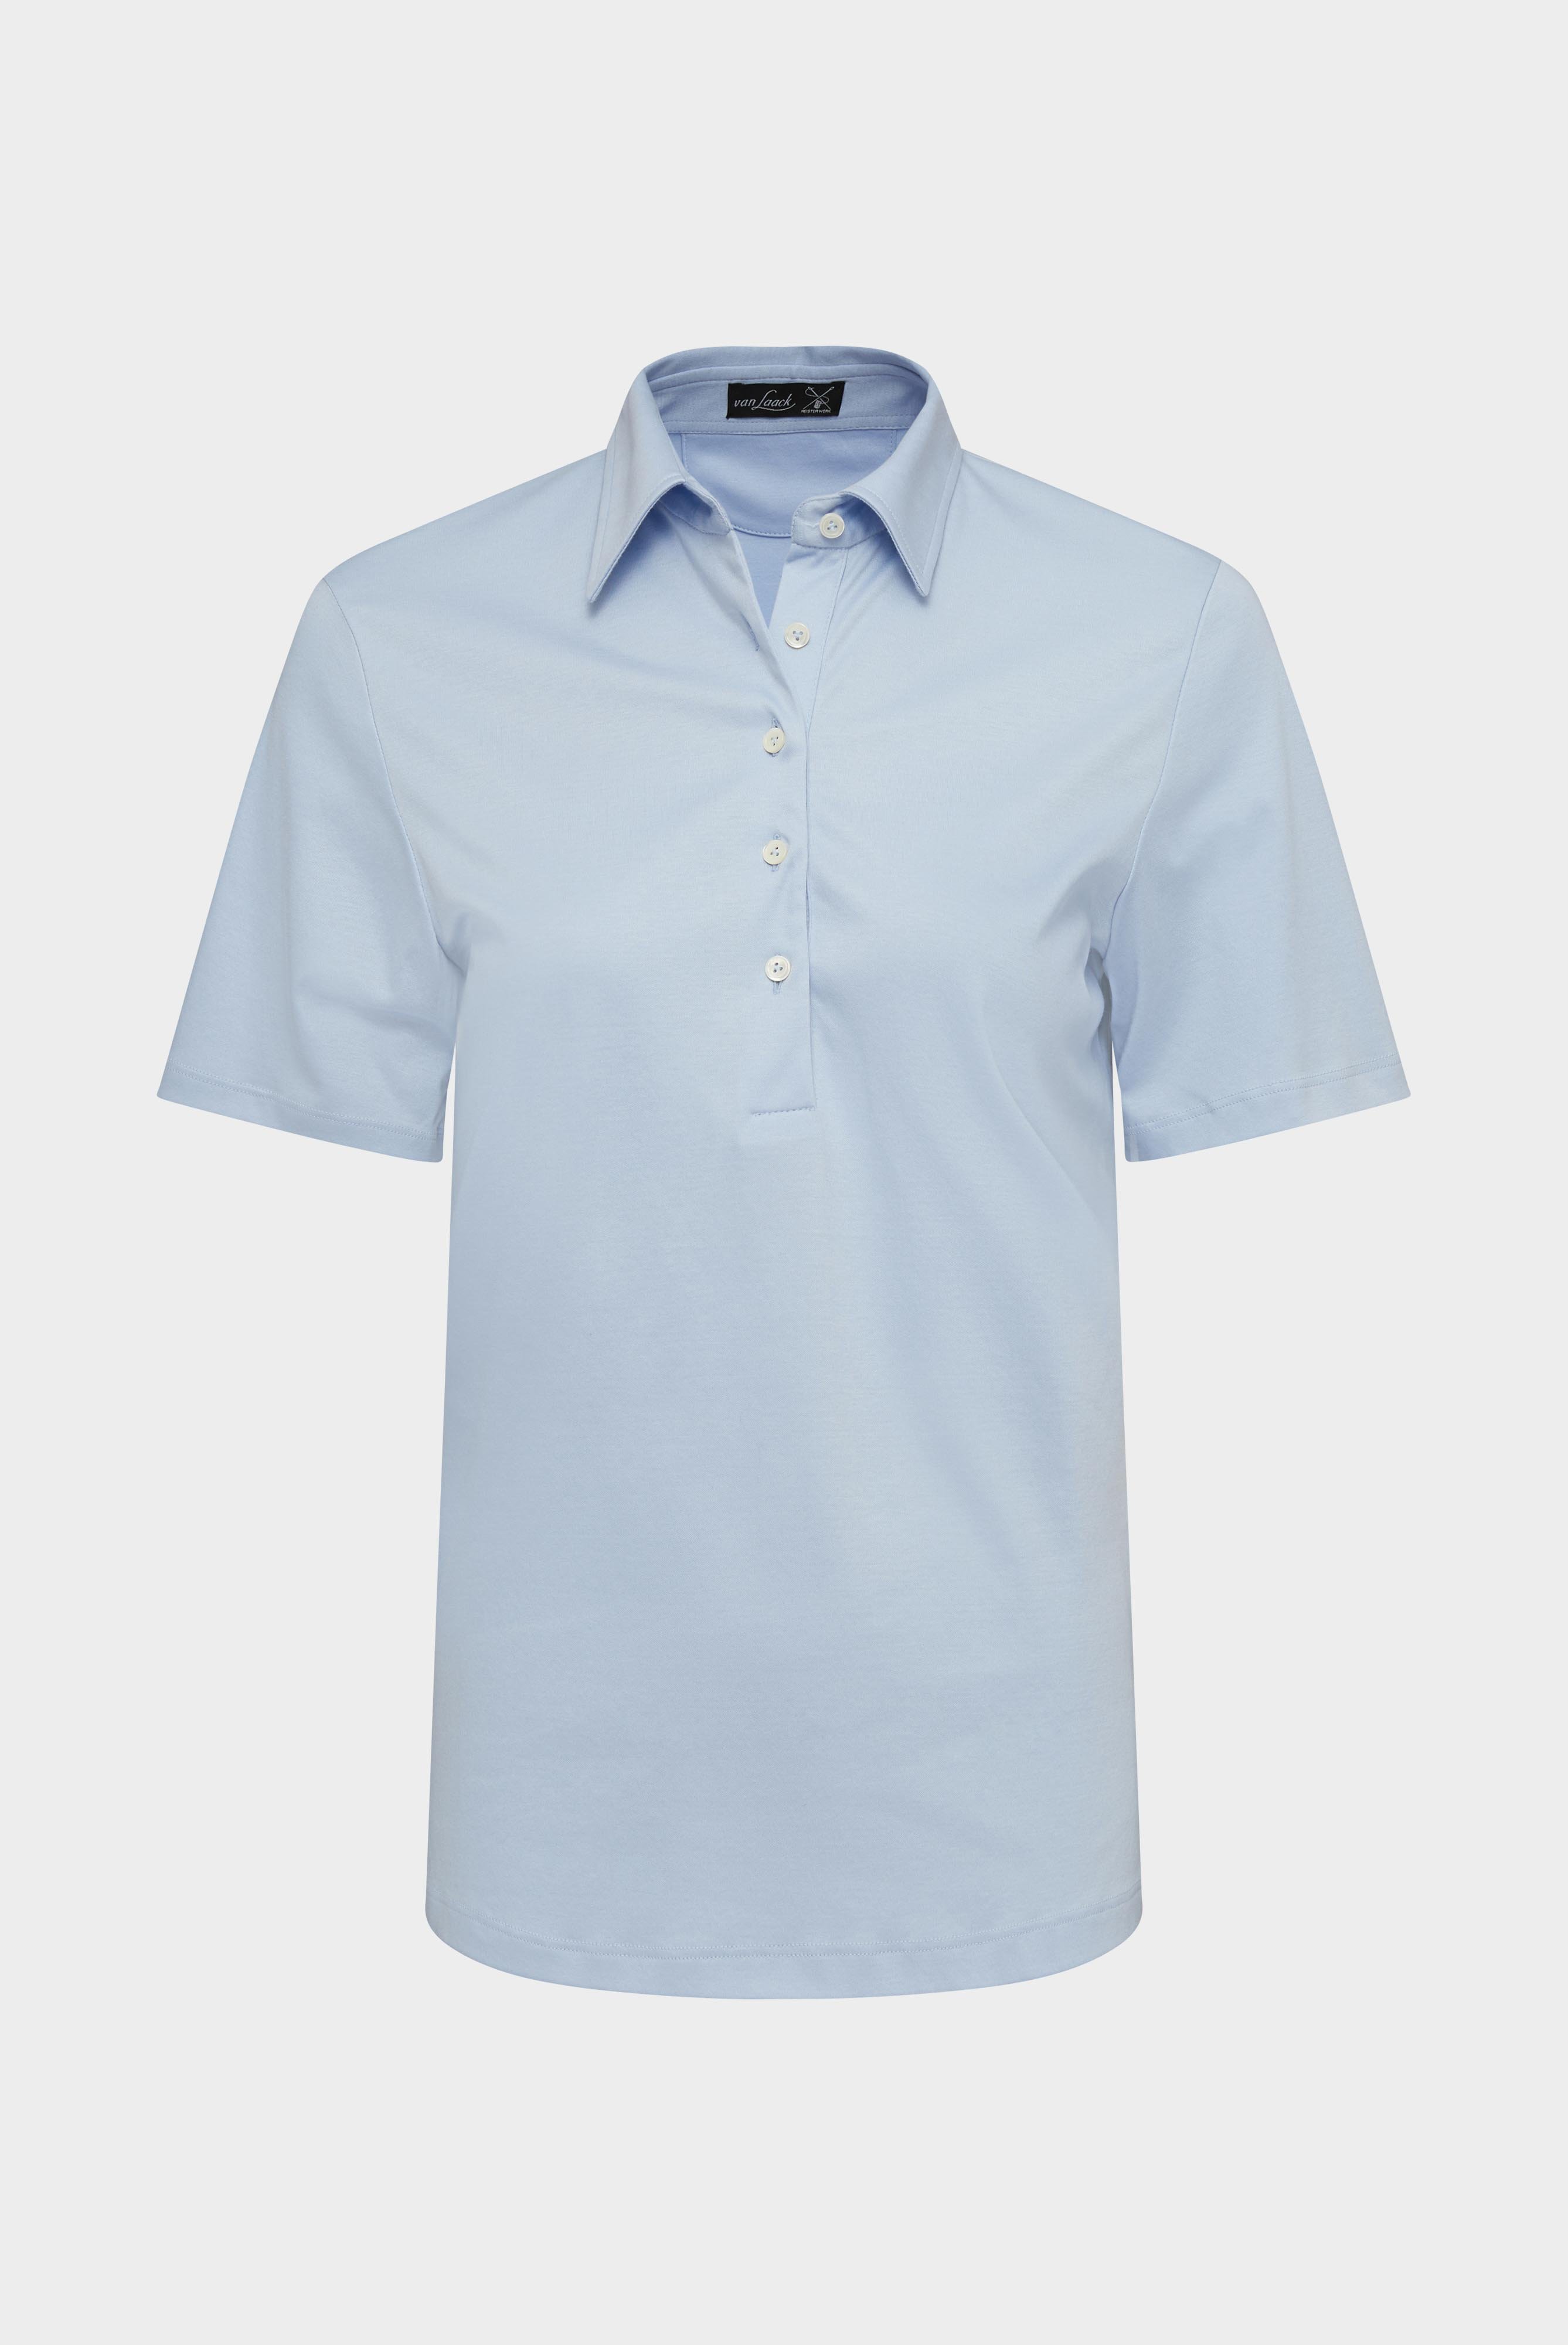 Tops & T-Shirts+Classic Swiss Cotton Polo Shirt+05.2523.07.180031.720.36